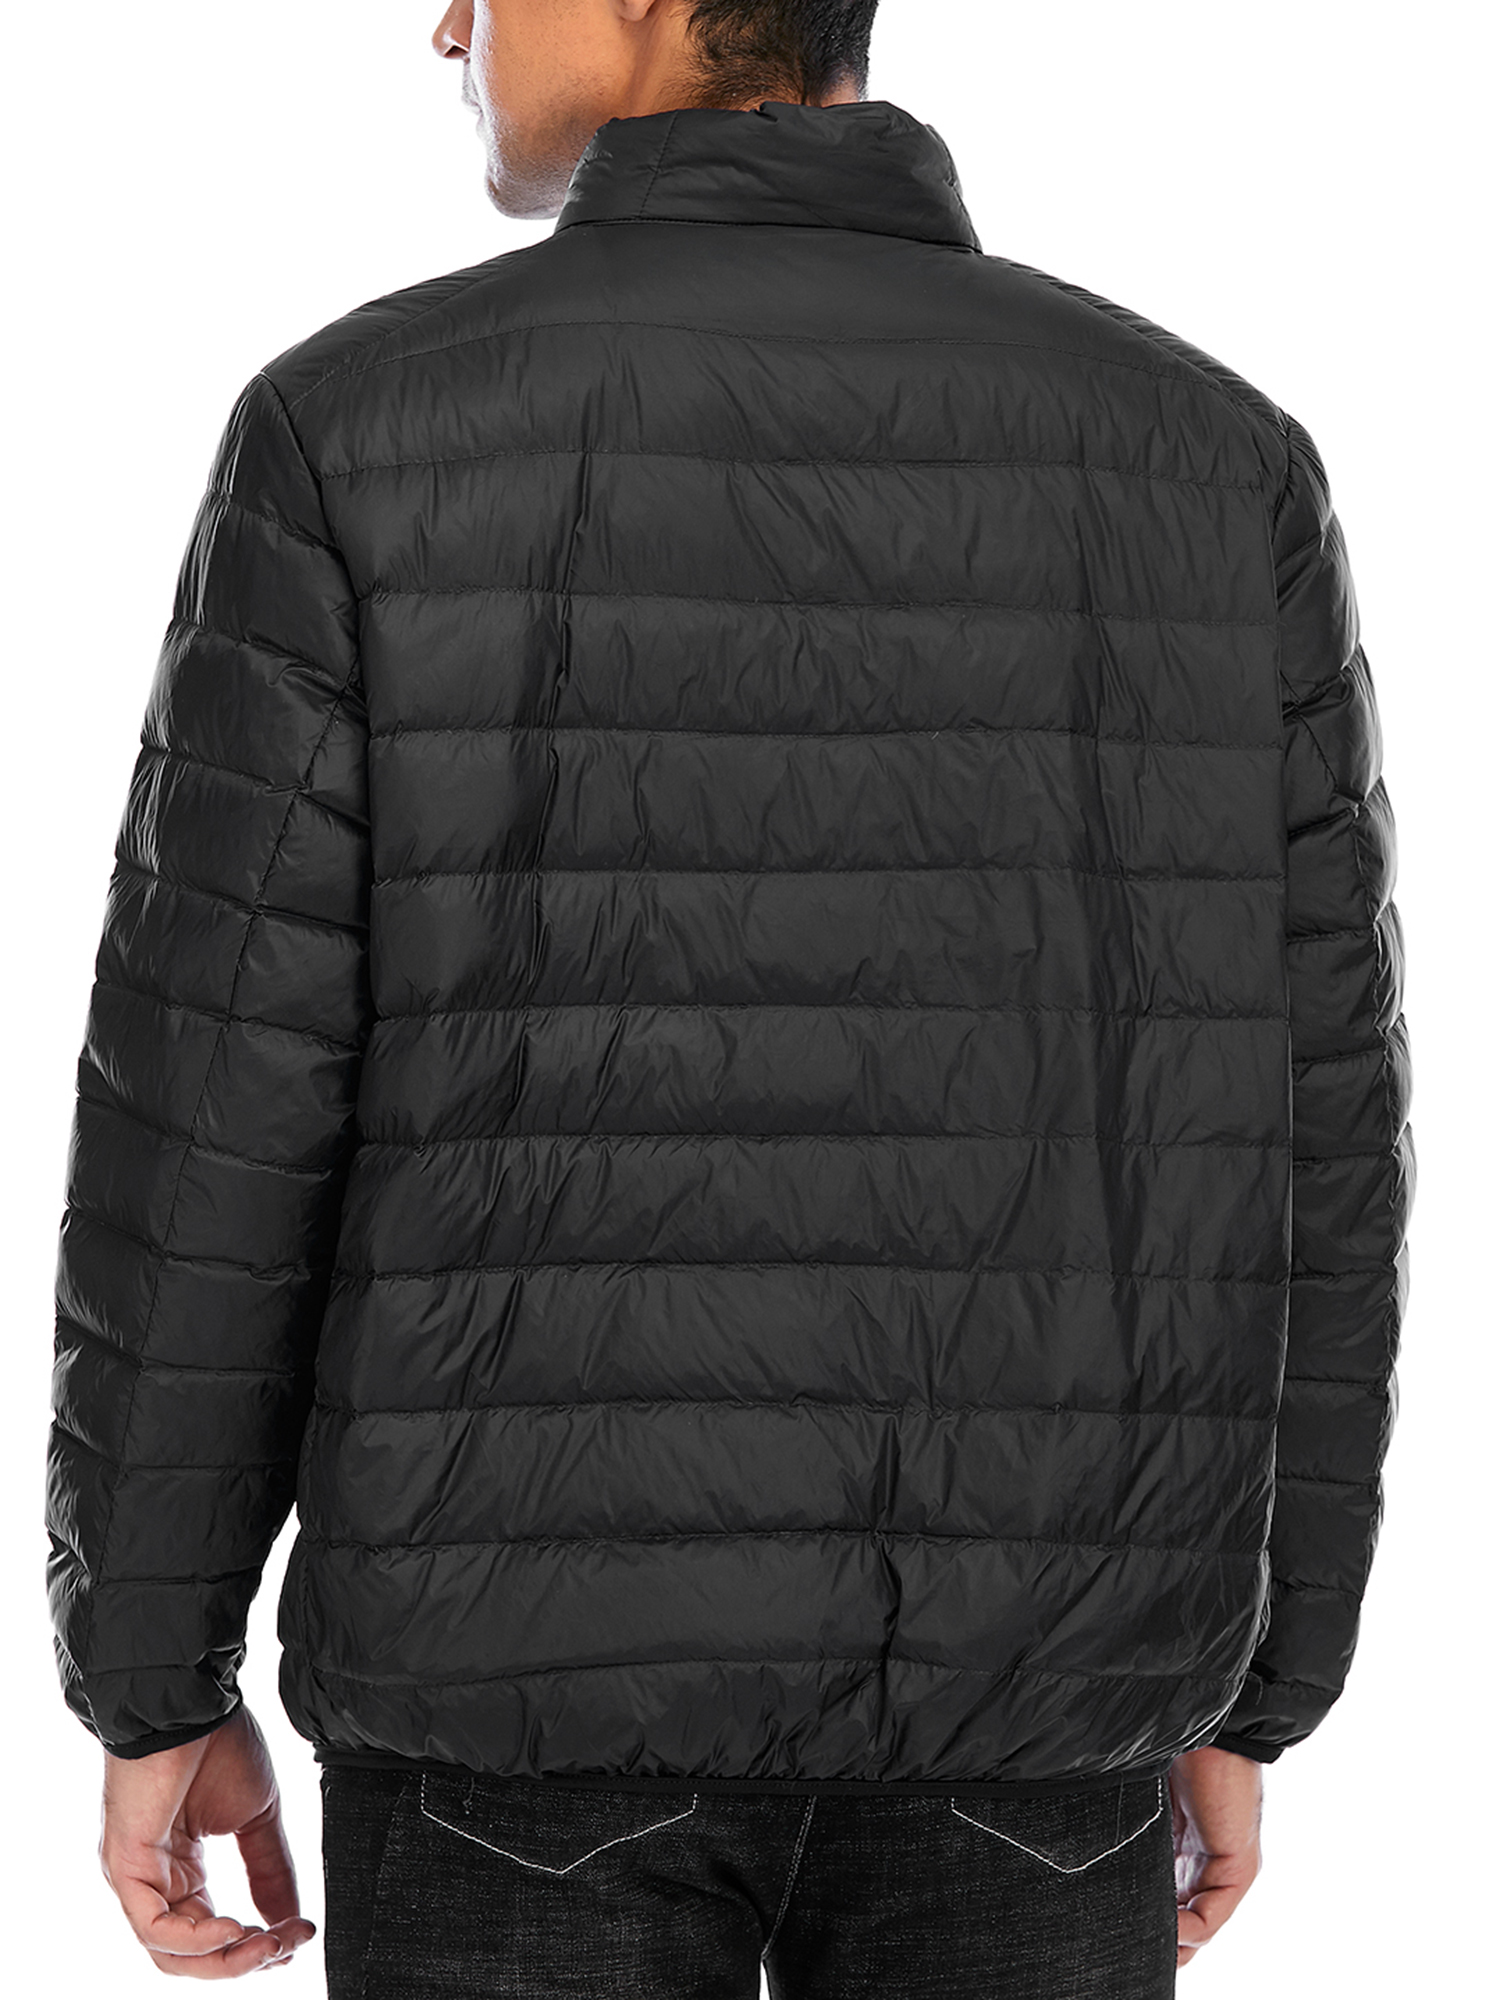 Mens Packable Down Puffer Jacket Lightweight, Water-Resistent Zipper Jackets Windproof Winter Insulation Puffer Coat Outdoor,Black S-2XL - image 4 of 8